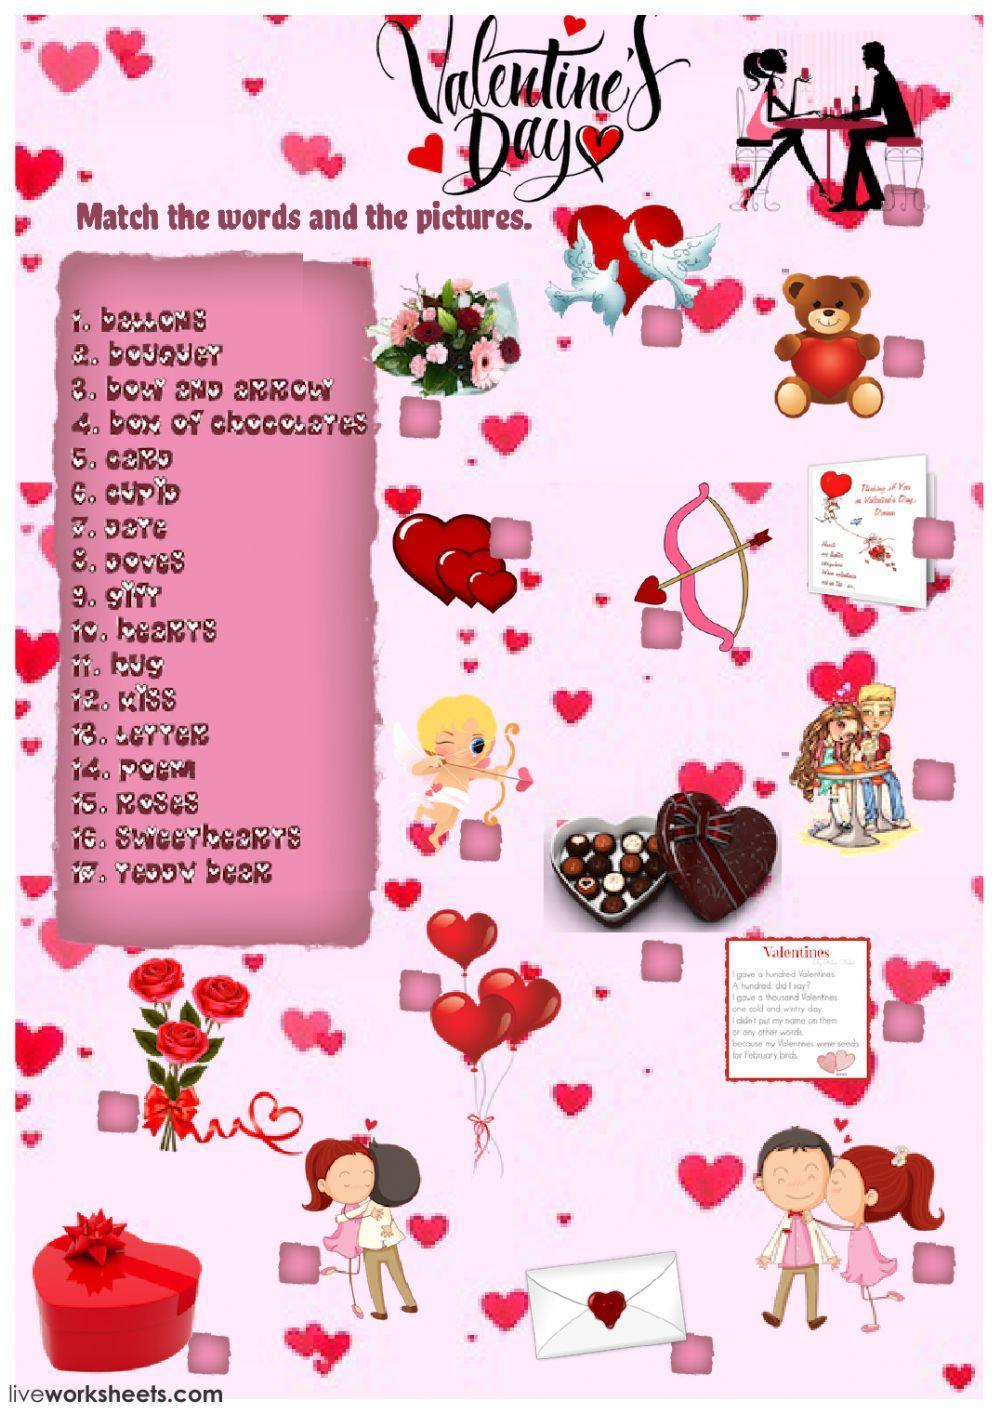 Valentine's Day vocabulary